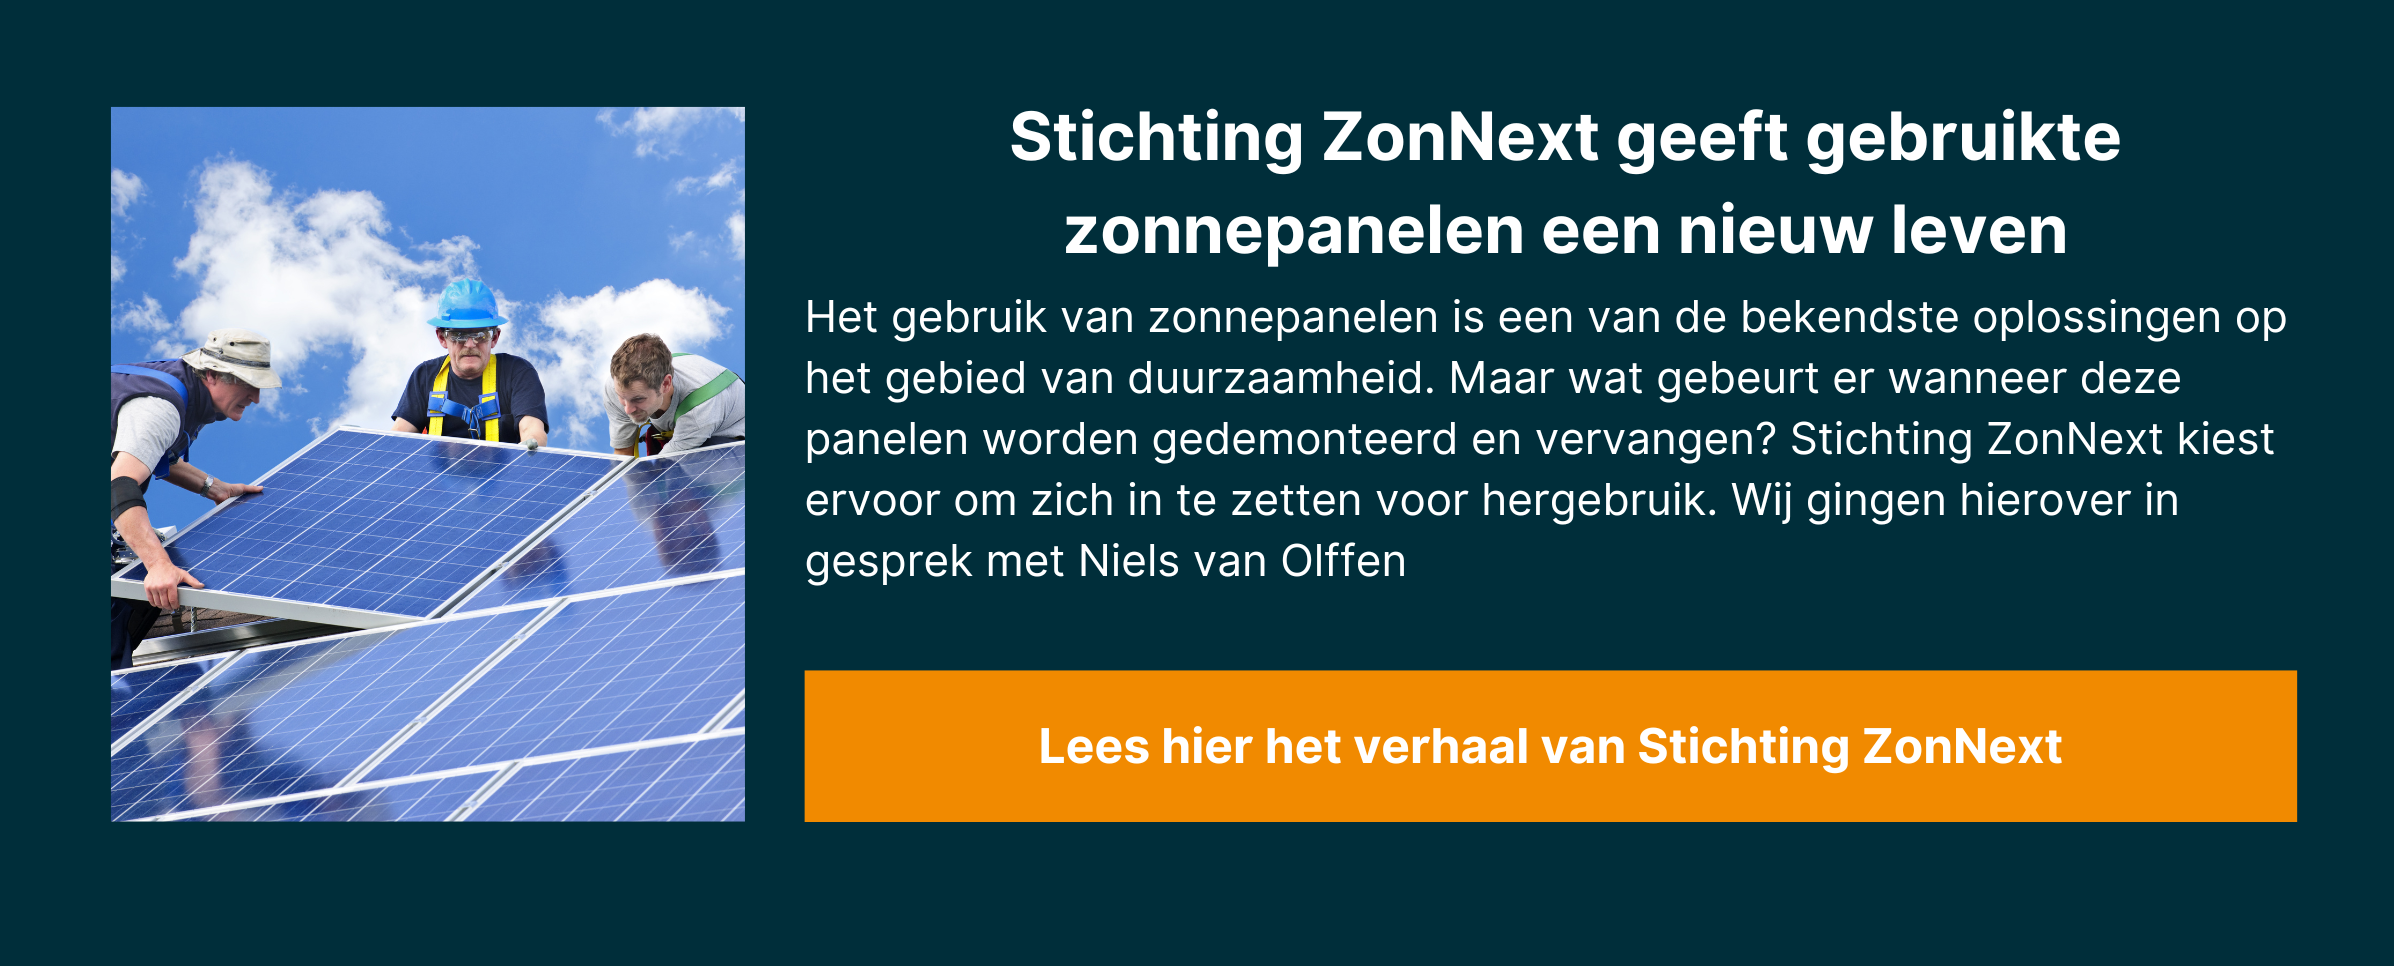 Stichting ZonNext